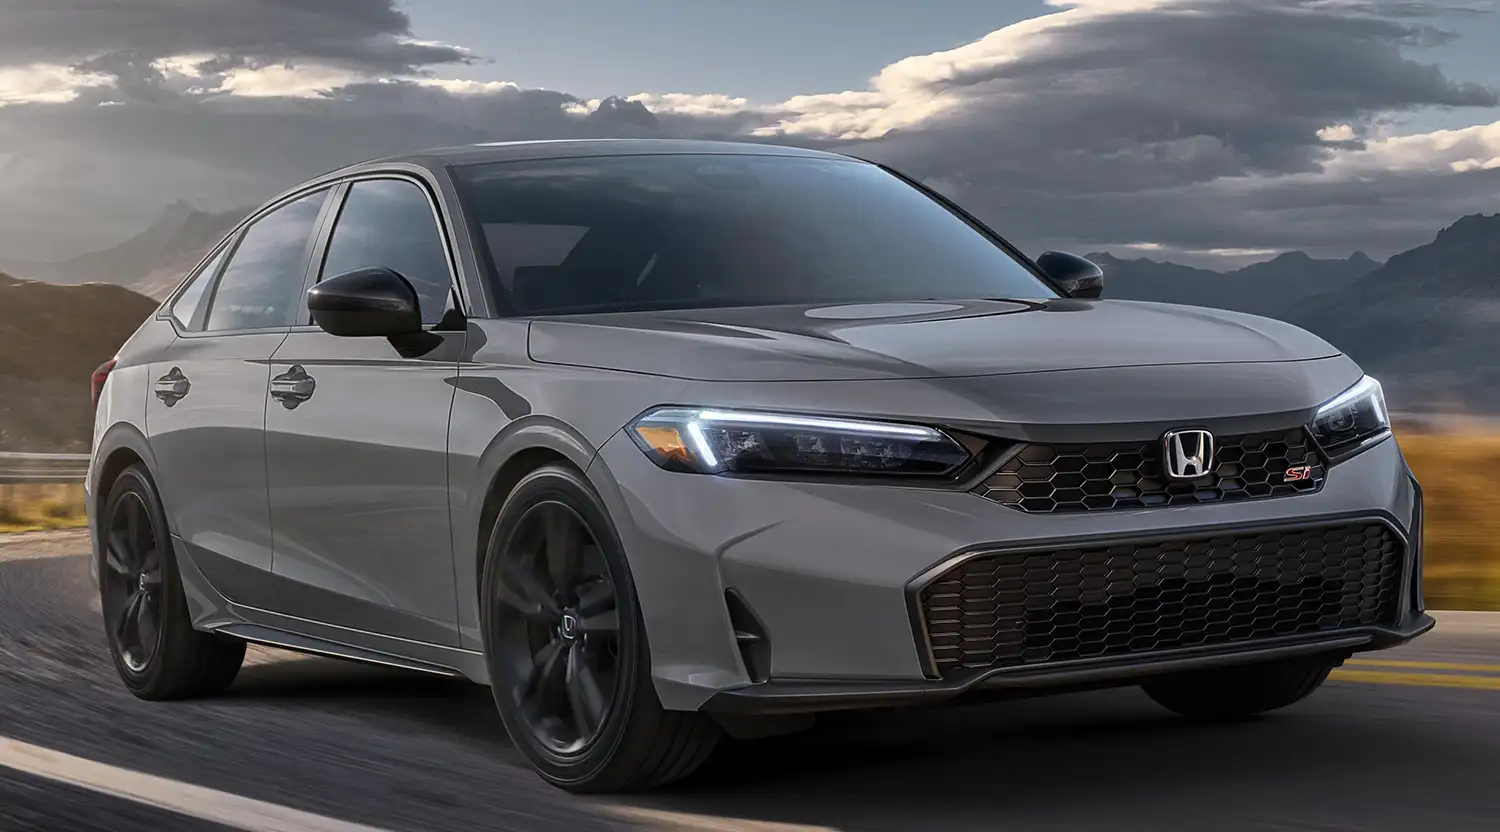 Honda Civic Si(2025): Aggressive Styling and Advanced Tech